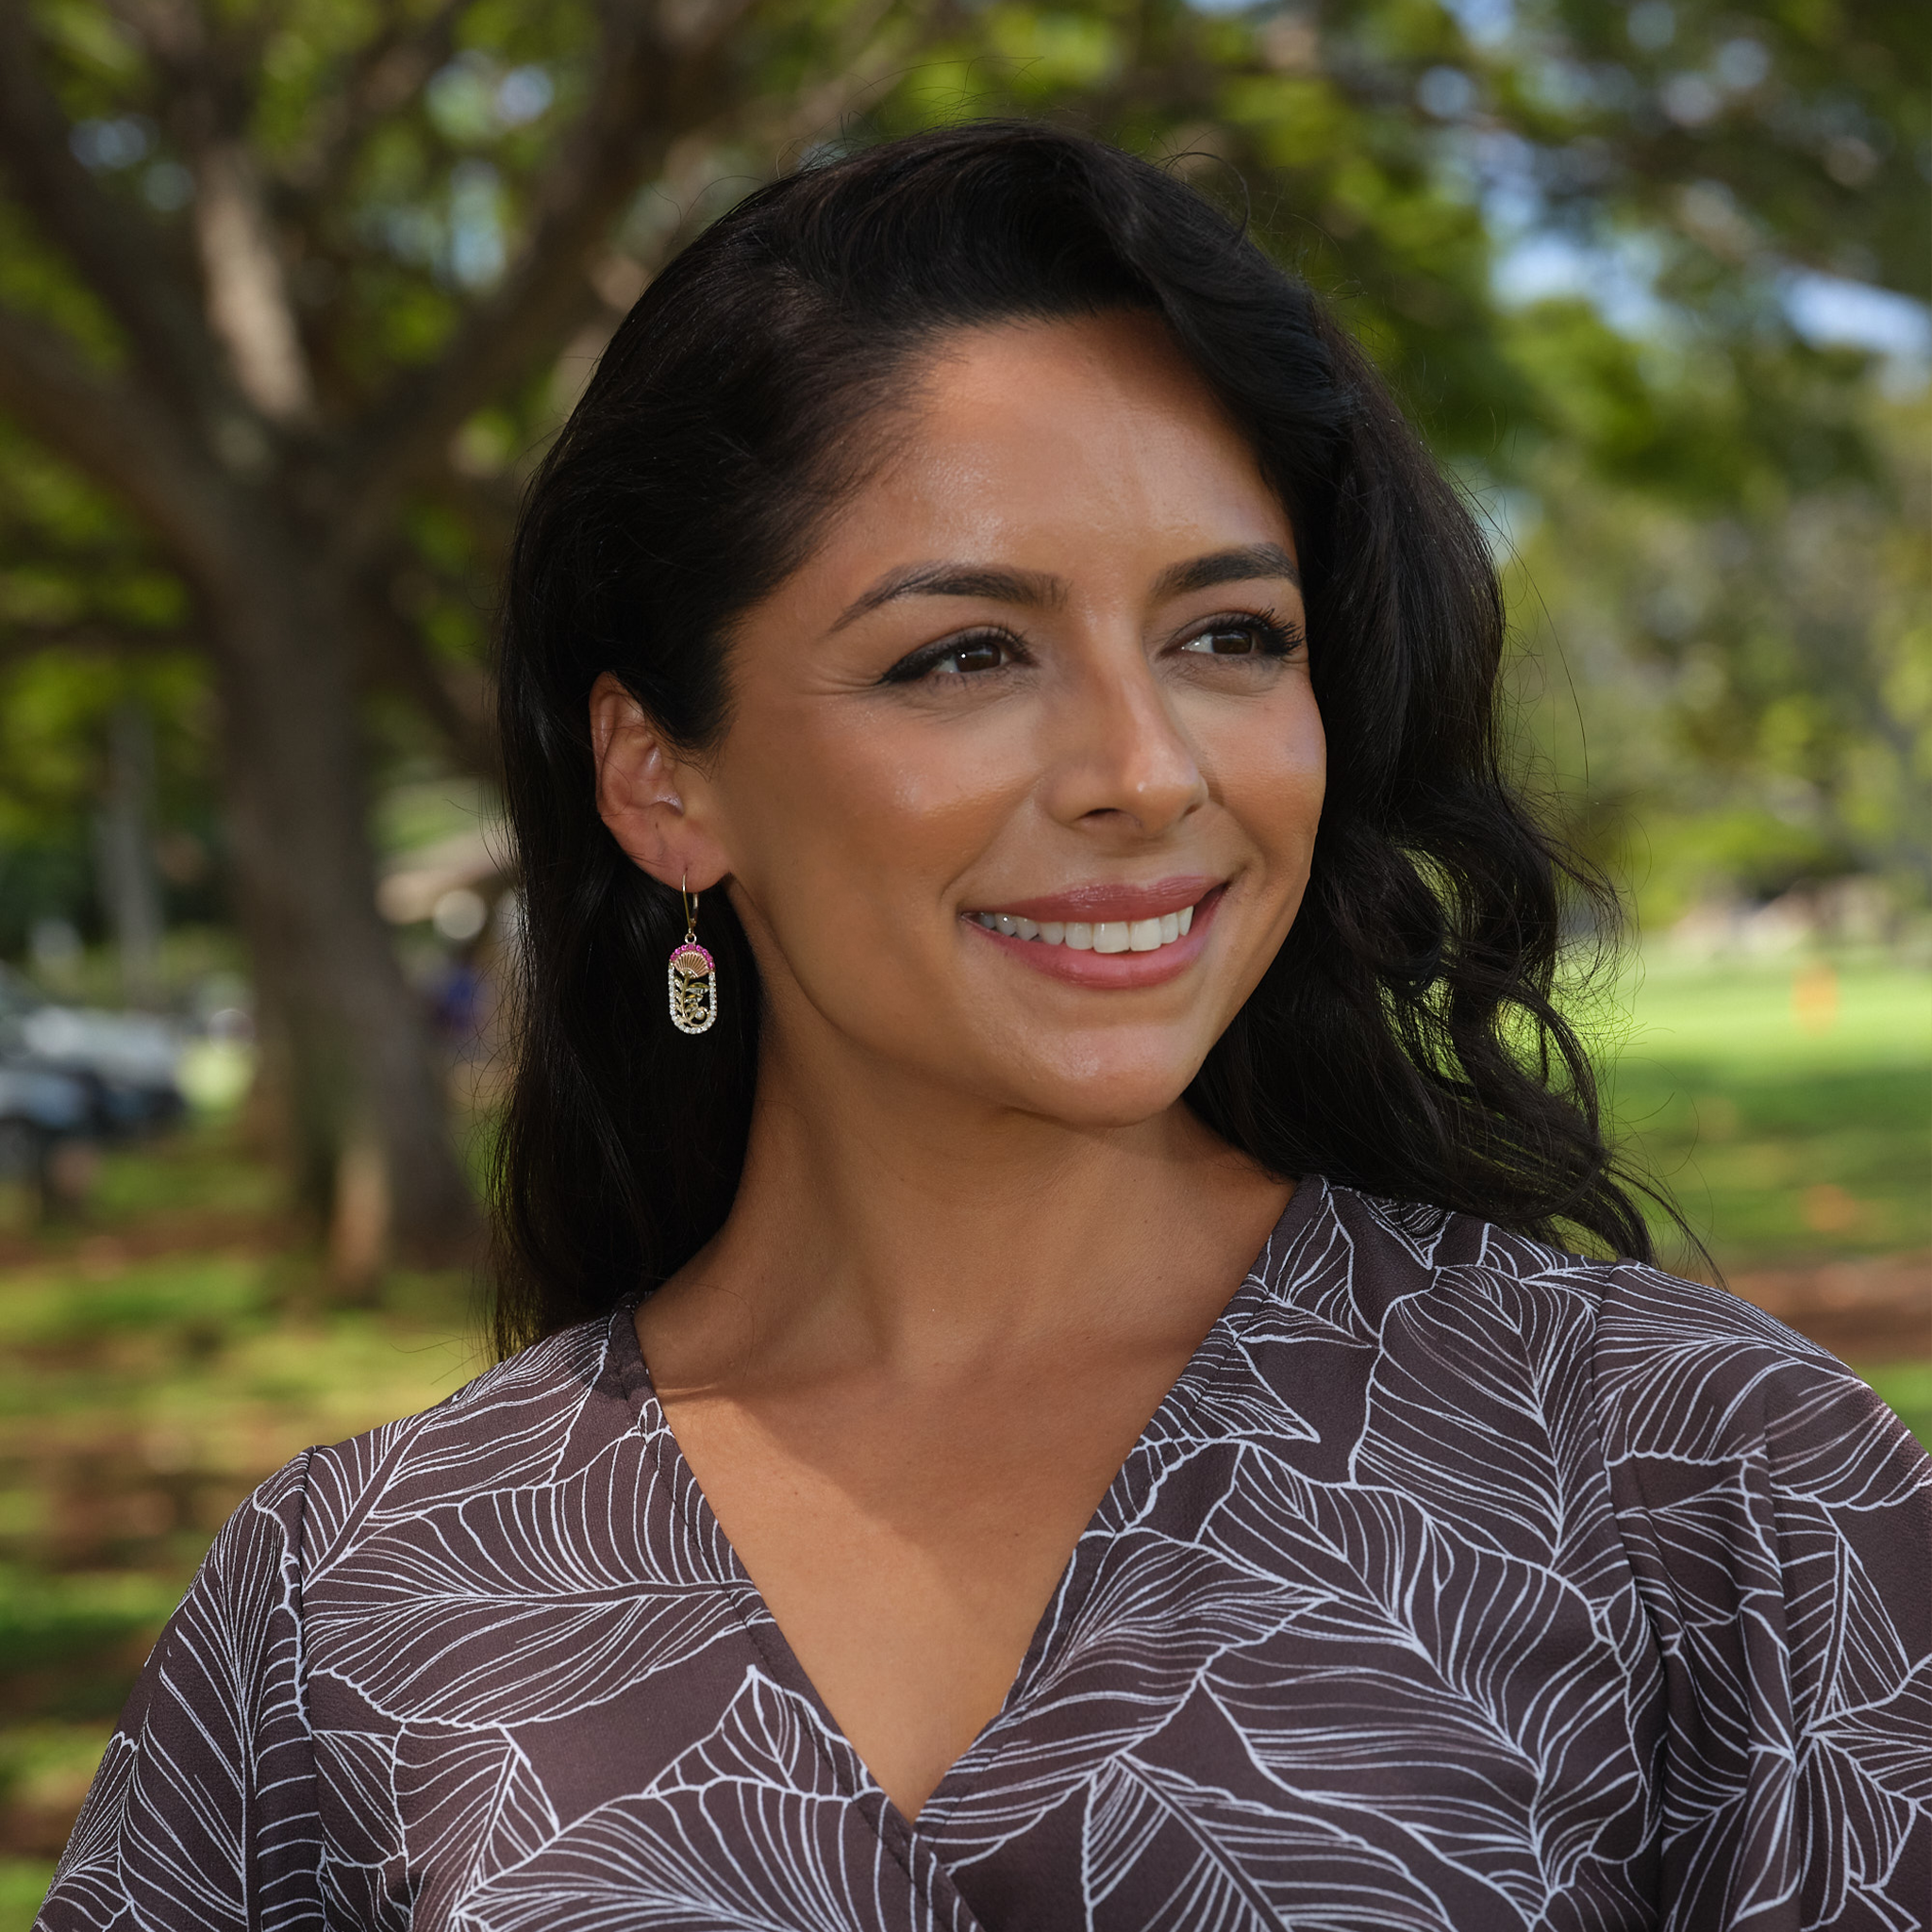 ʻŌhiʻa Lehua Ruby Earrings in Two Tone Gold with Diamonds - 24mm